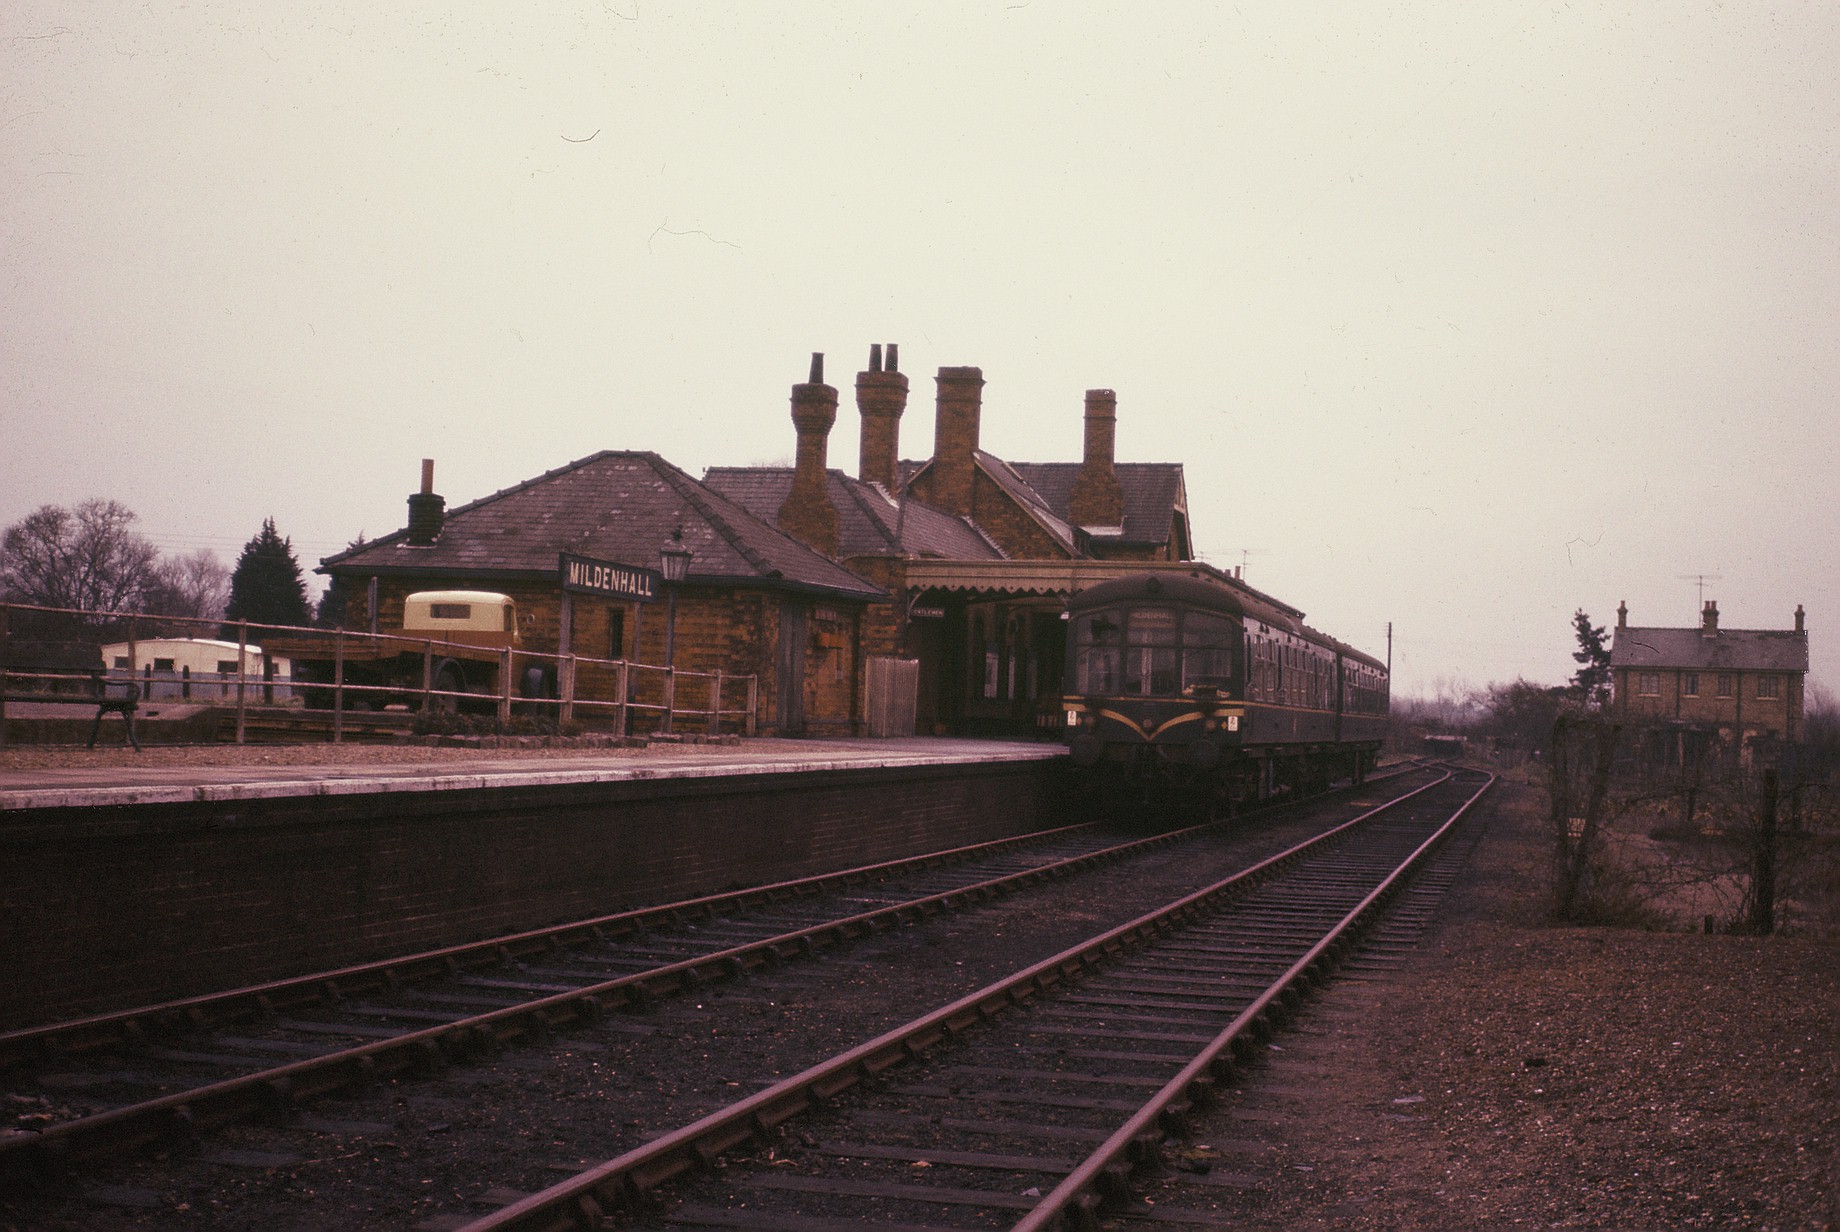 Mildenhall railway station